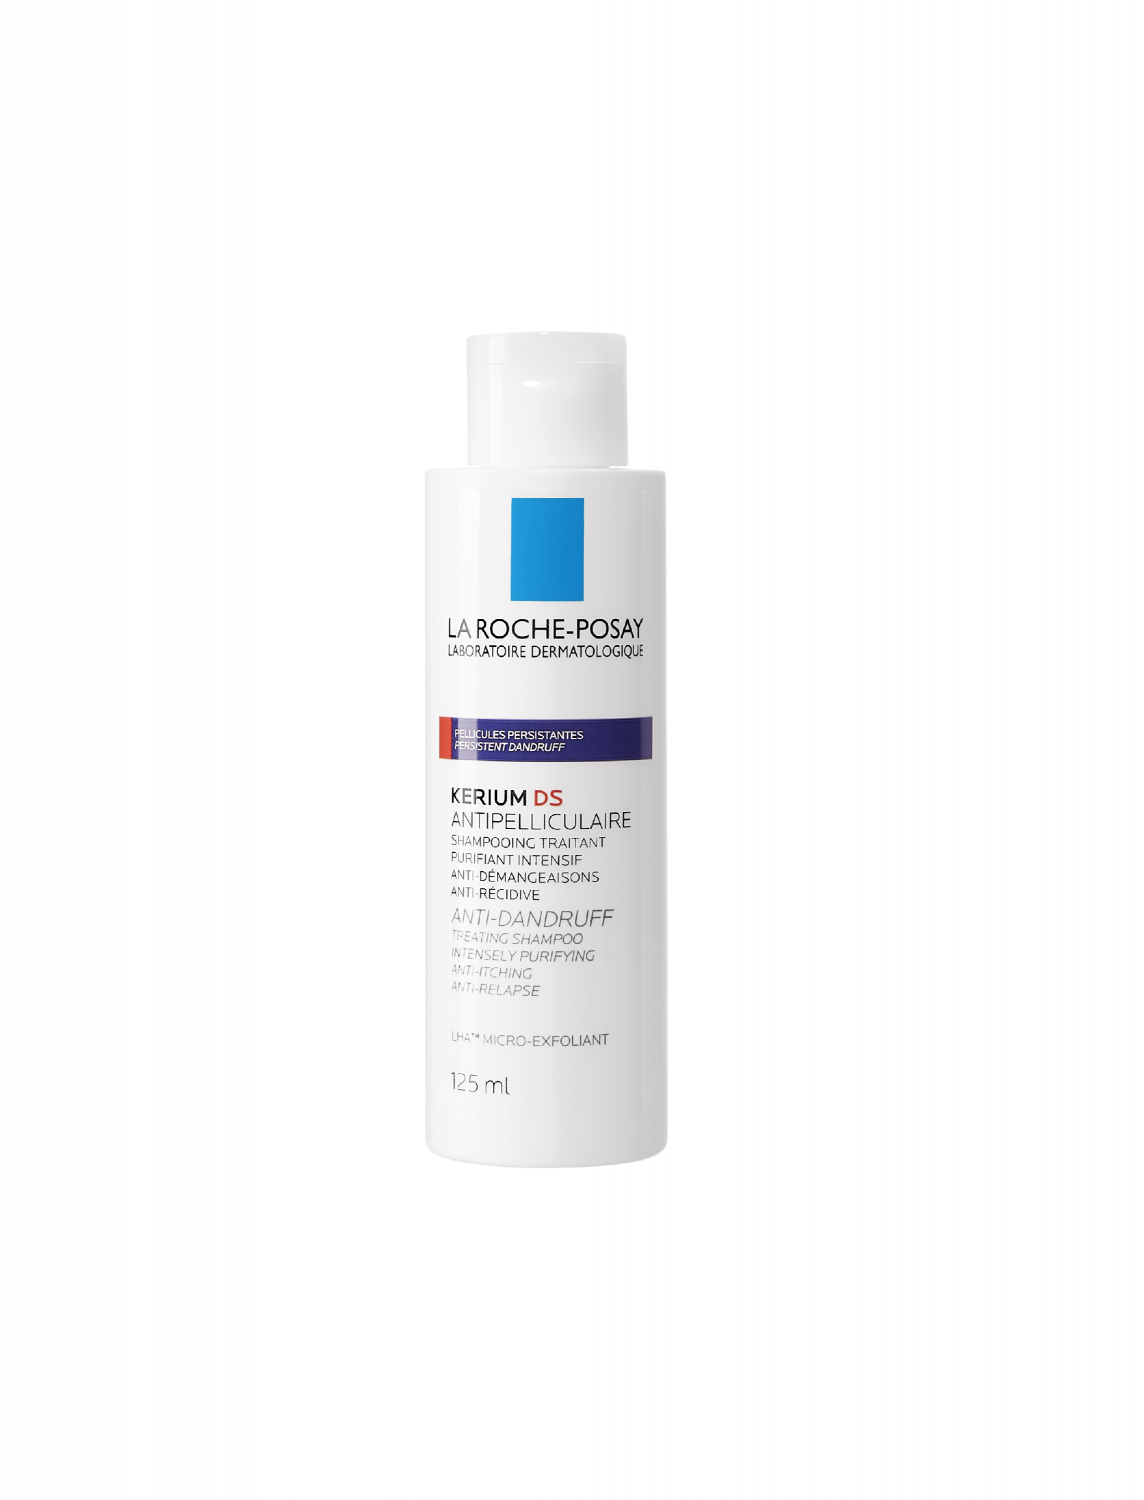 Kerium DS antipelliculaire intensif shampooing cure micro-exfoliant La Roche-Posay - flacon de 125 ml